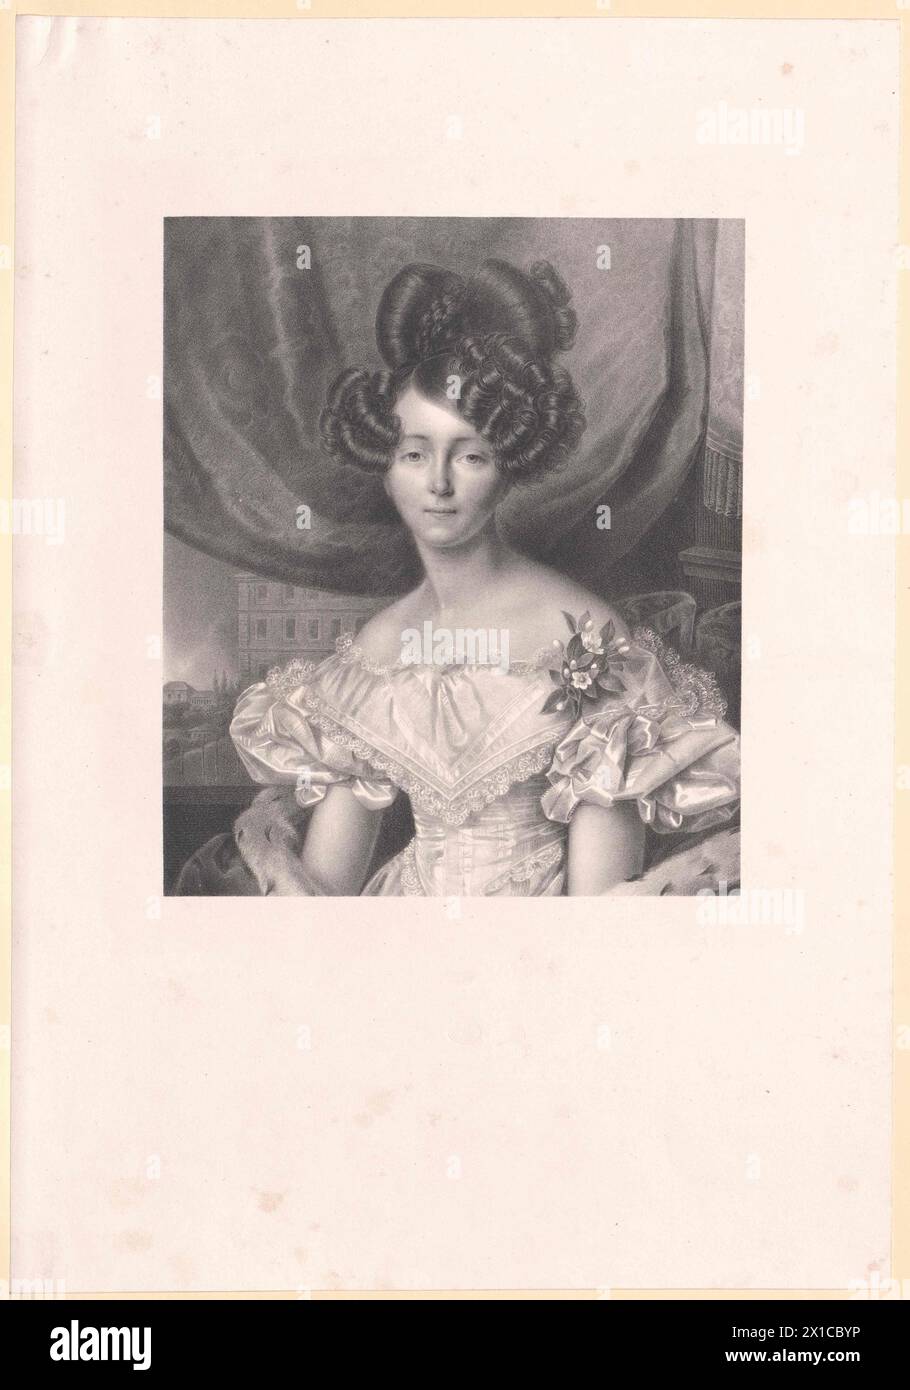 Augusta, principessa di Sassonia-Weimar Eisenach, - 19830422 PD80848 - Rechteinfo: Rights Managed (RM) Foto Stock